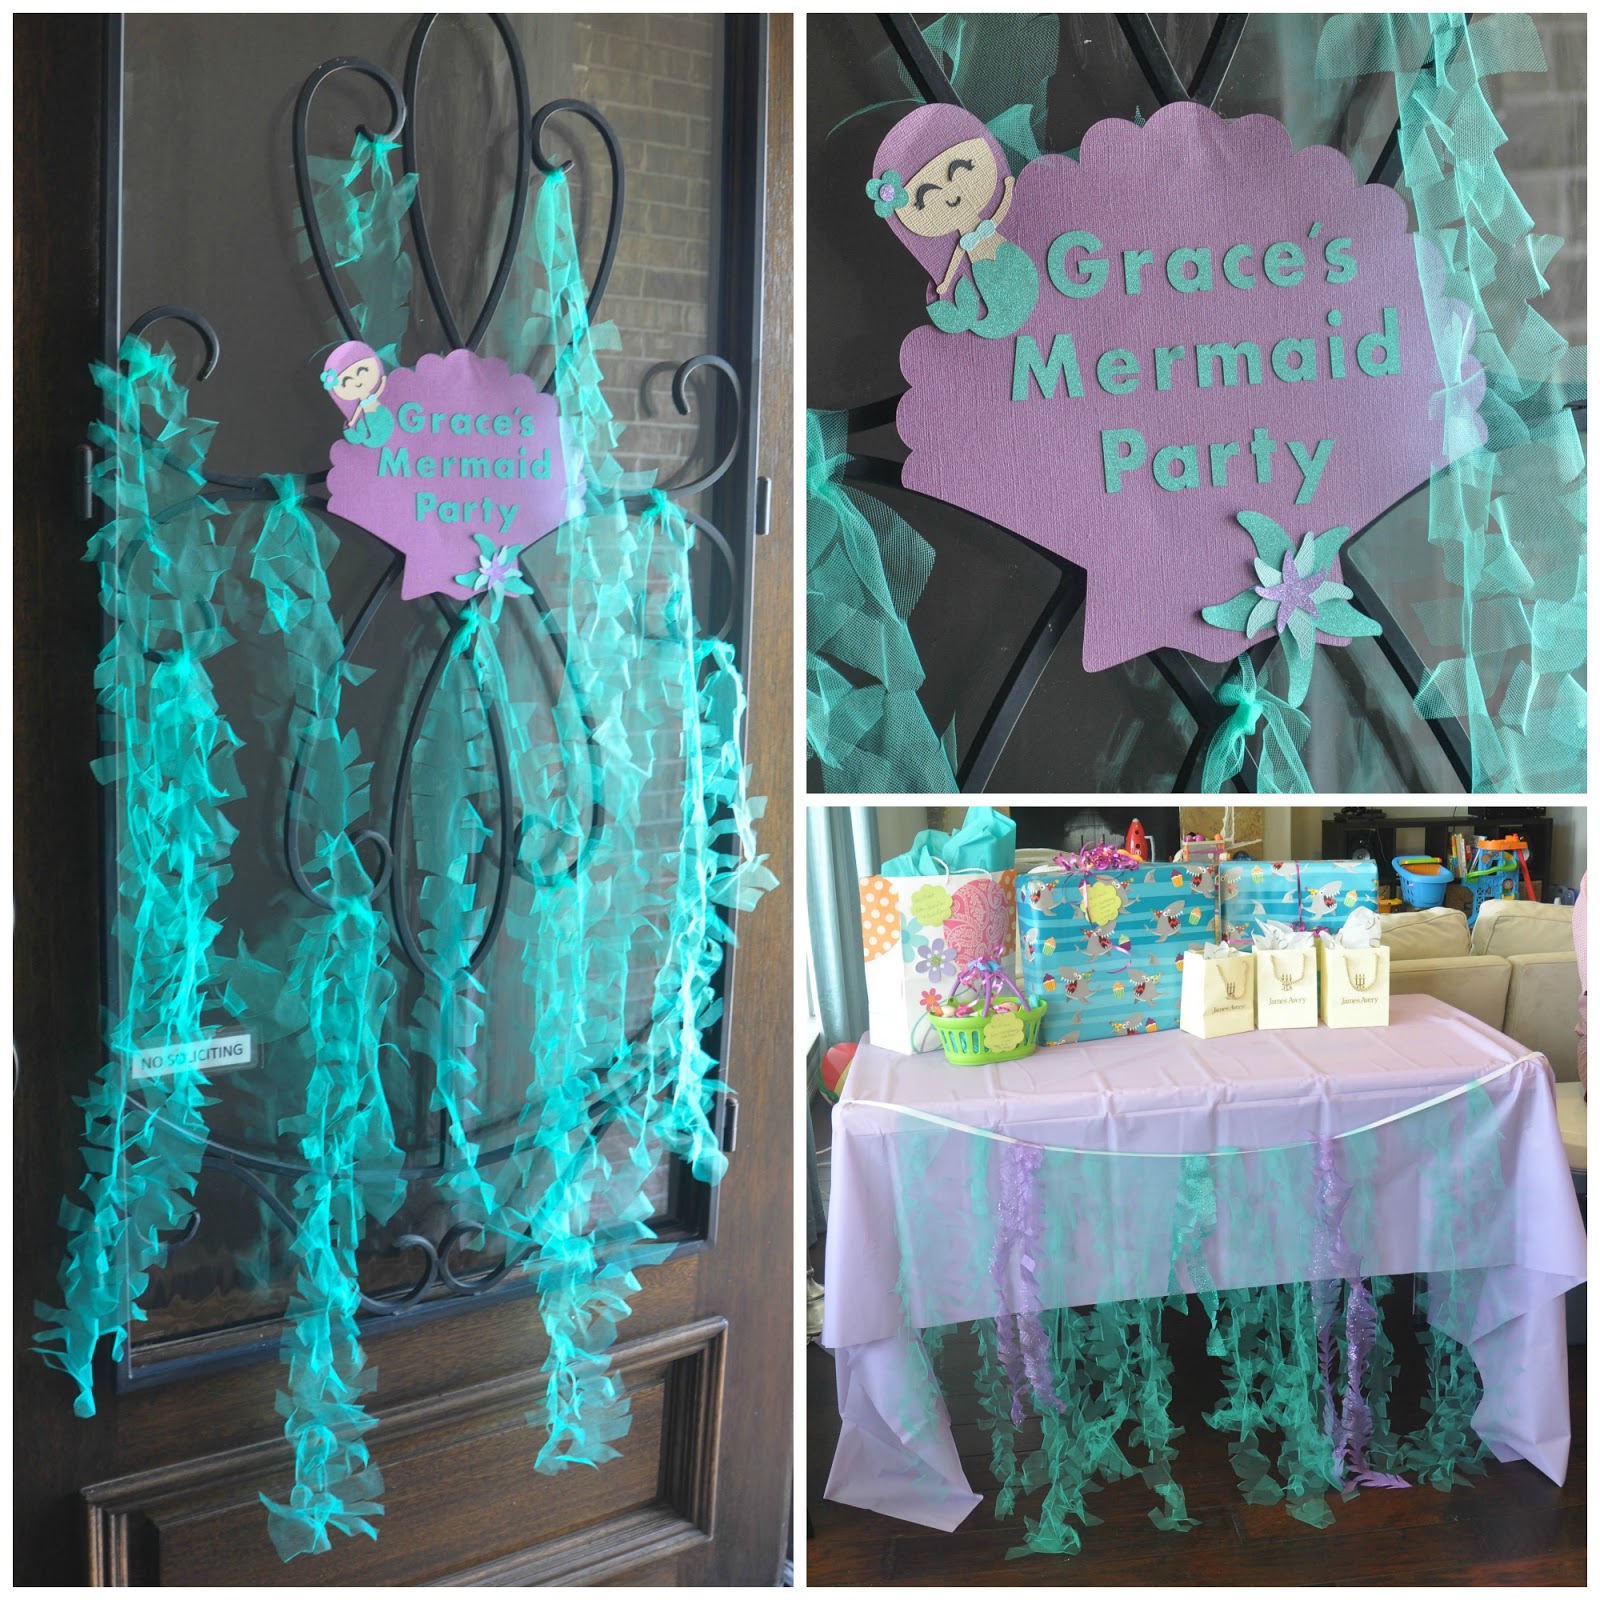 Sparkly Mermaid Seaweed  A DIY Party Decoration